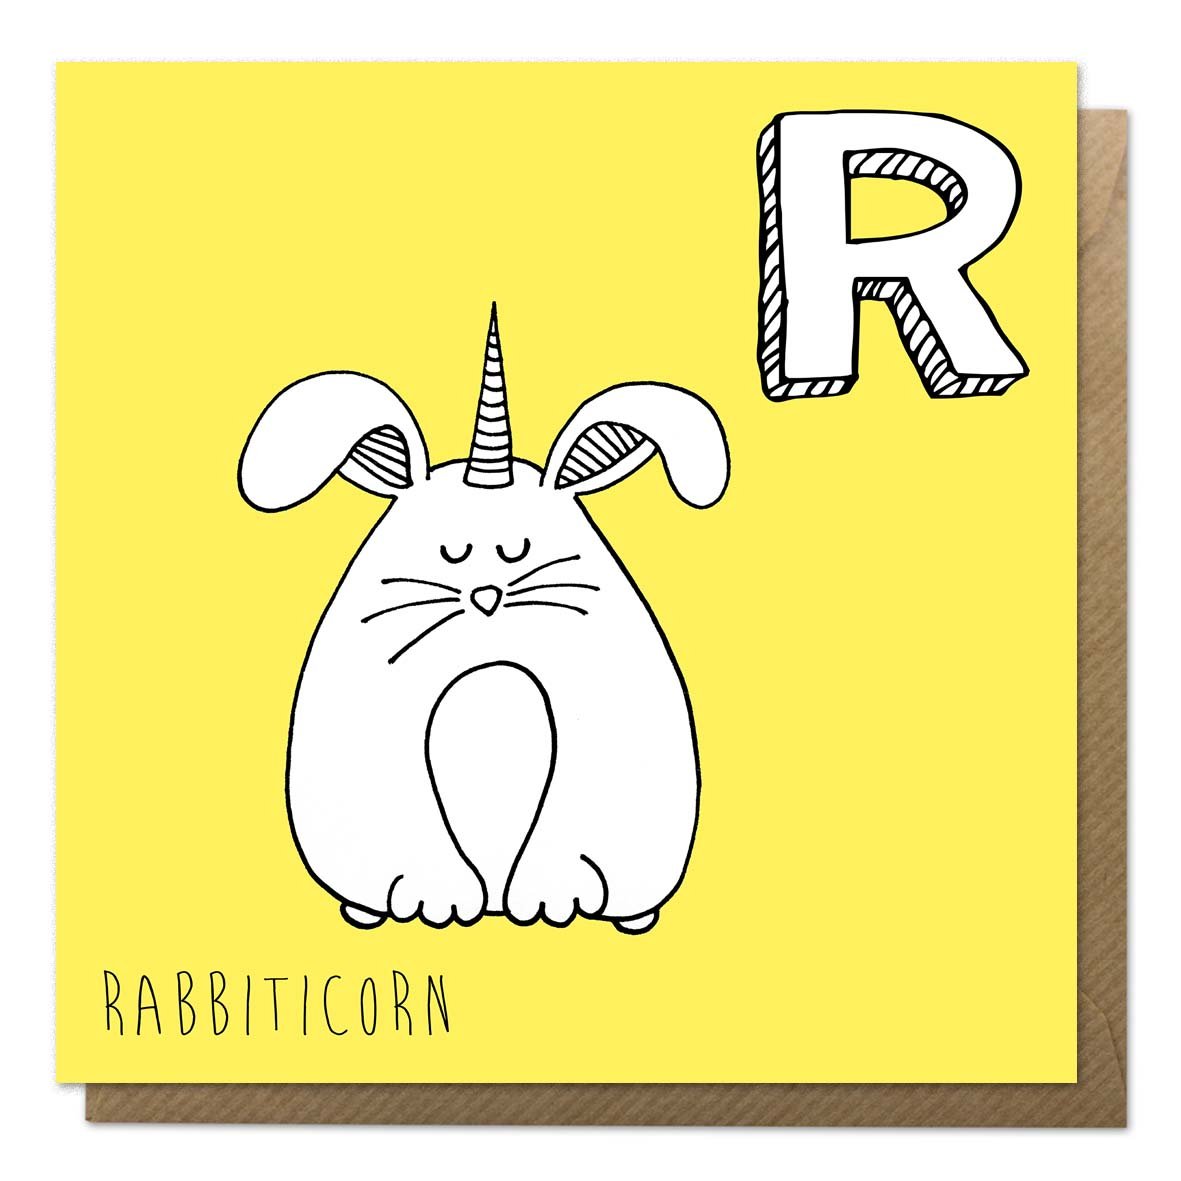 Yellow unicorn alphabet card with an illustration of a rabbit unicorn